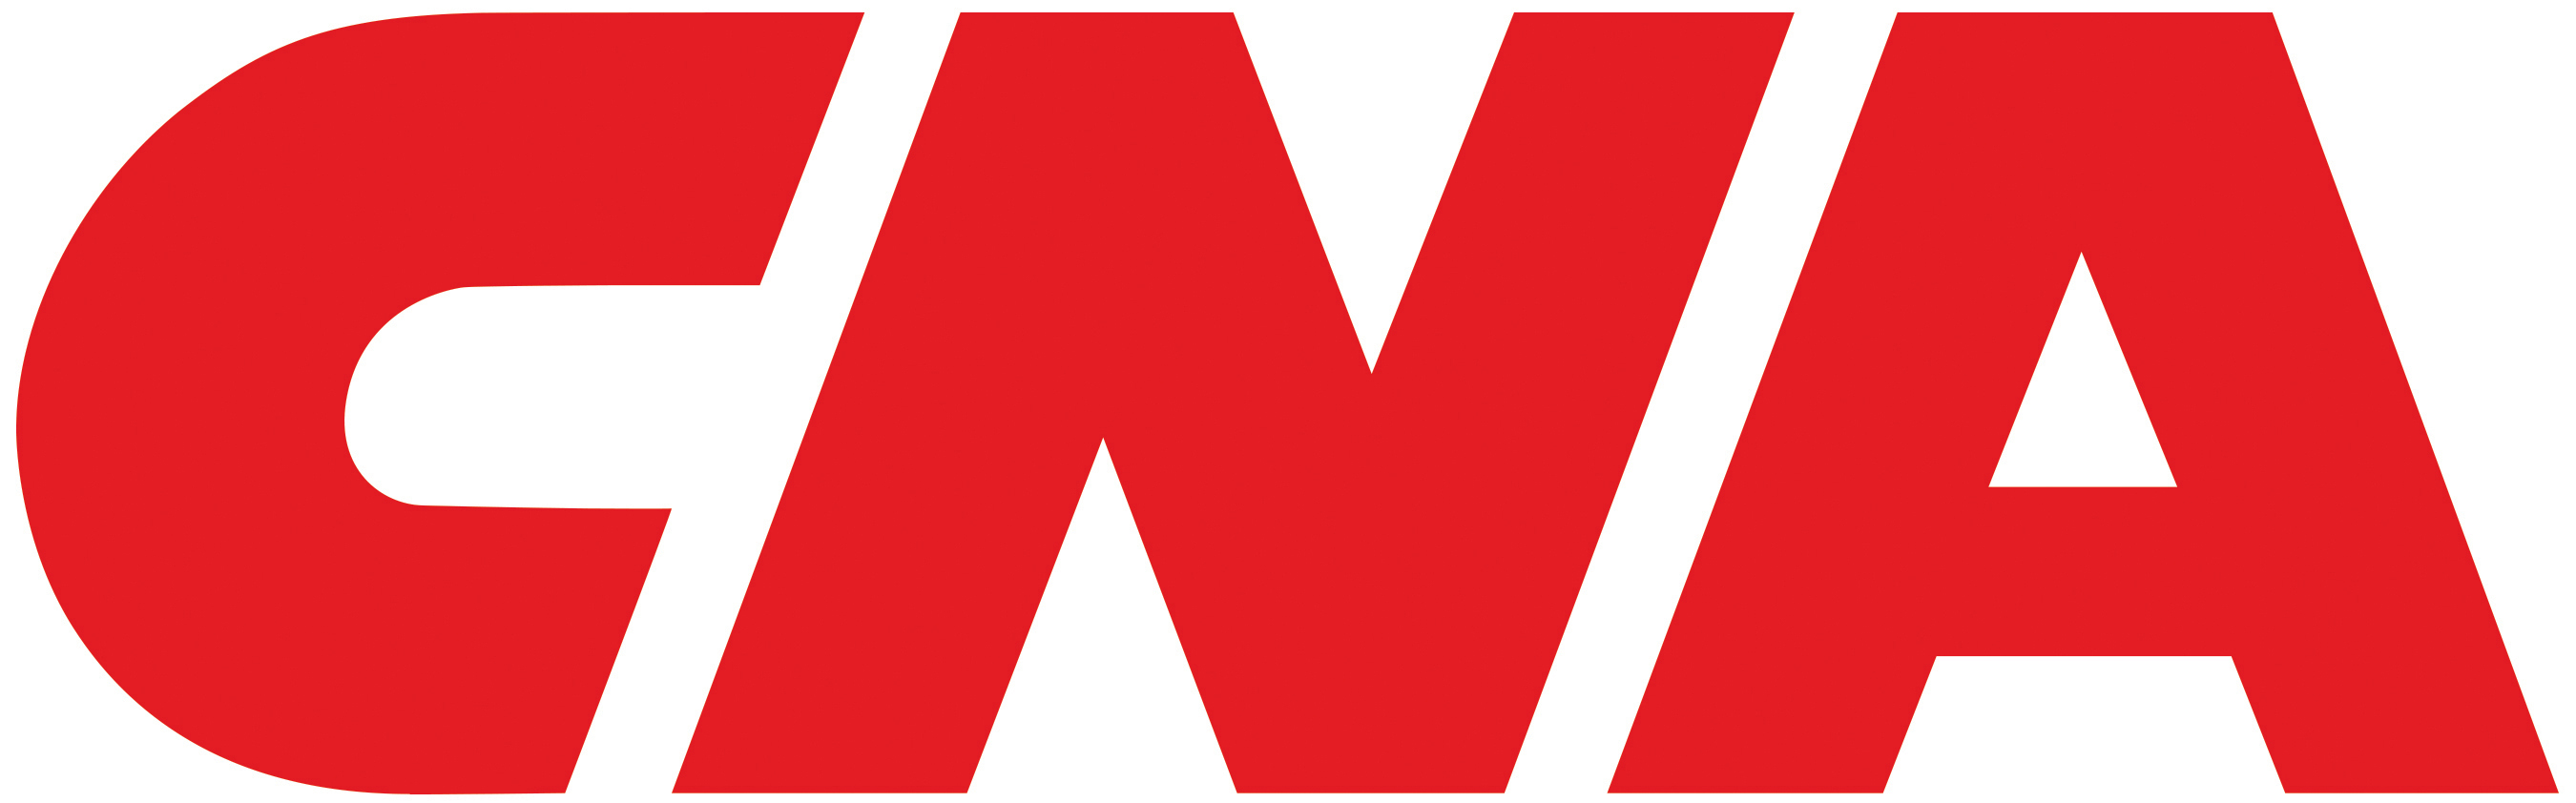 CNA logo. (PRNewsFoto/CNA Financial Corporation) (PRNewsFoto/)